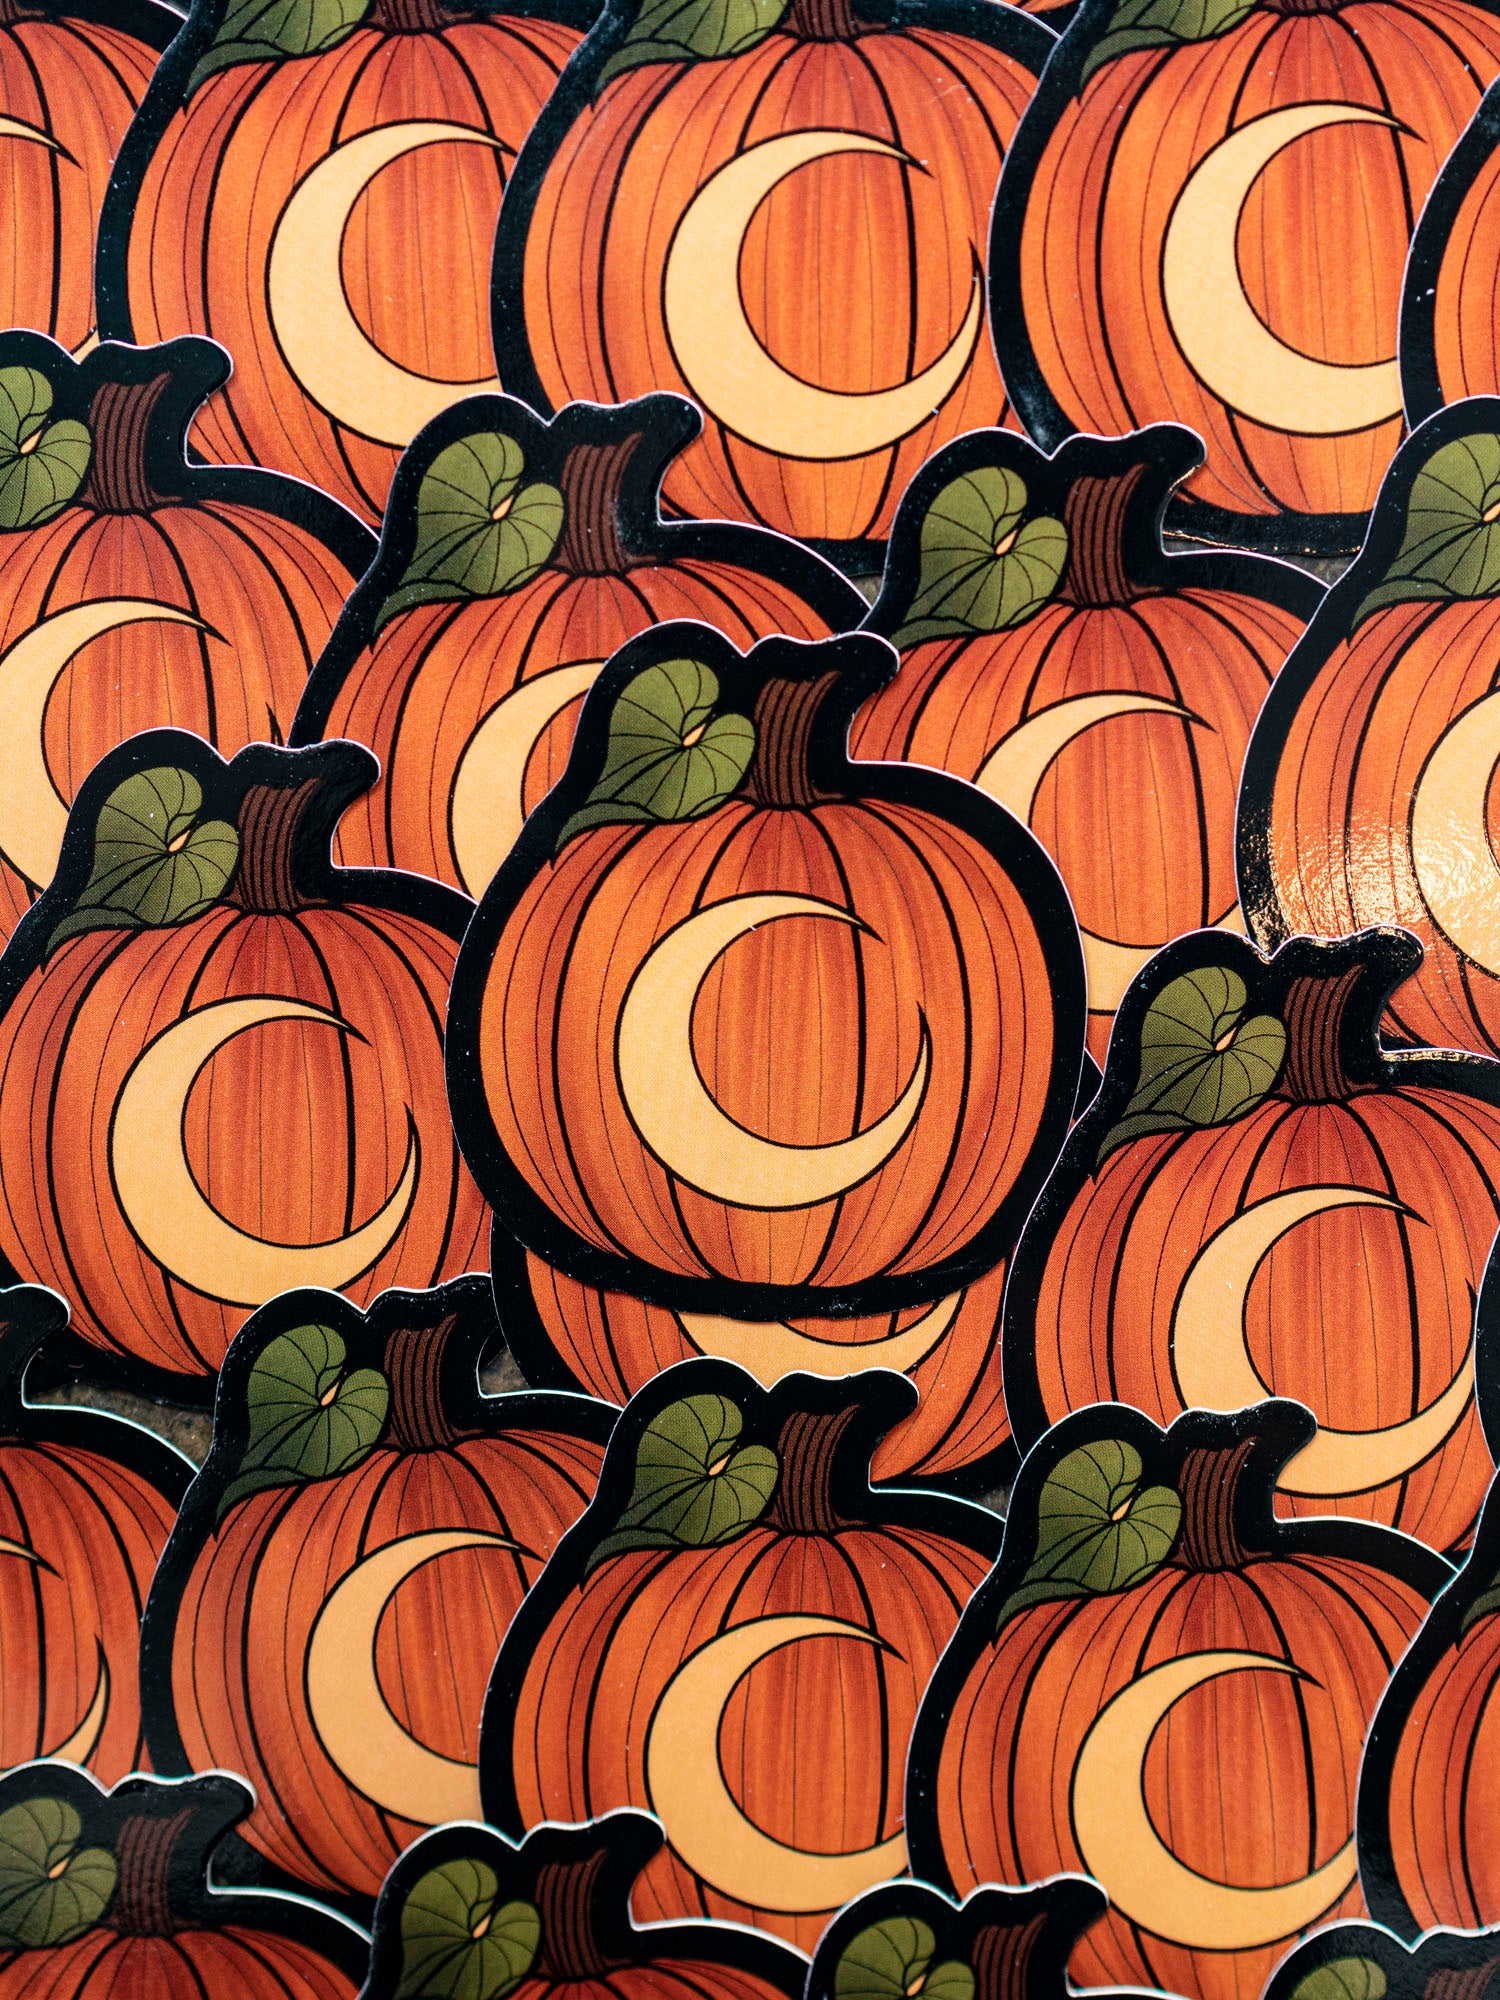 Pumpkin Sticker